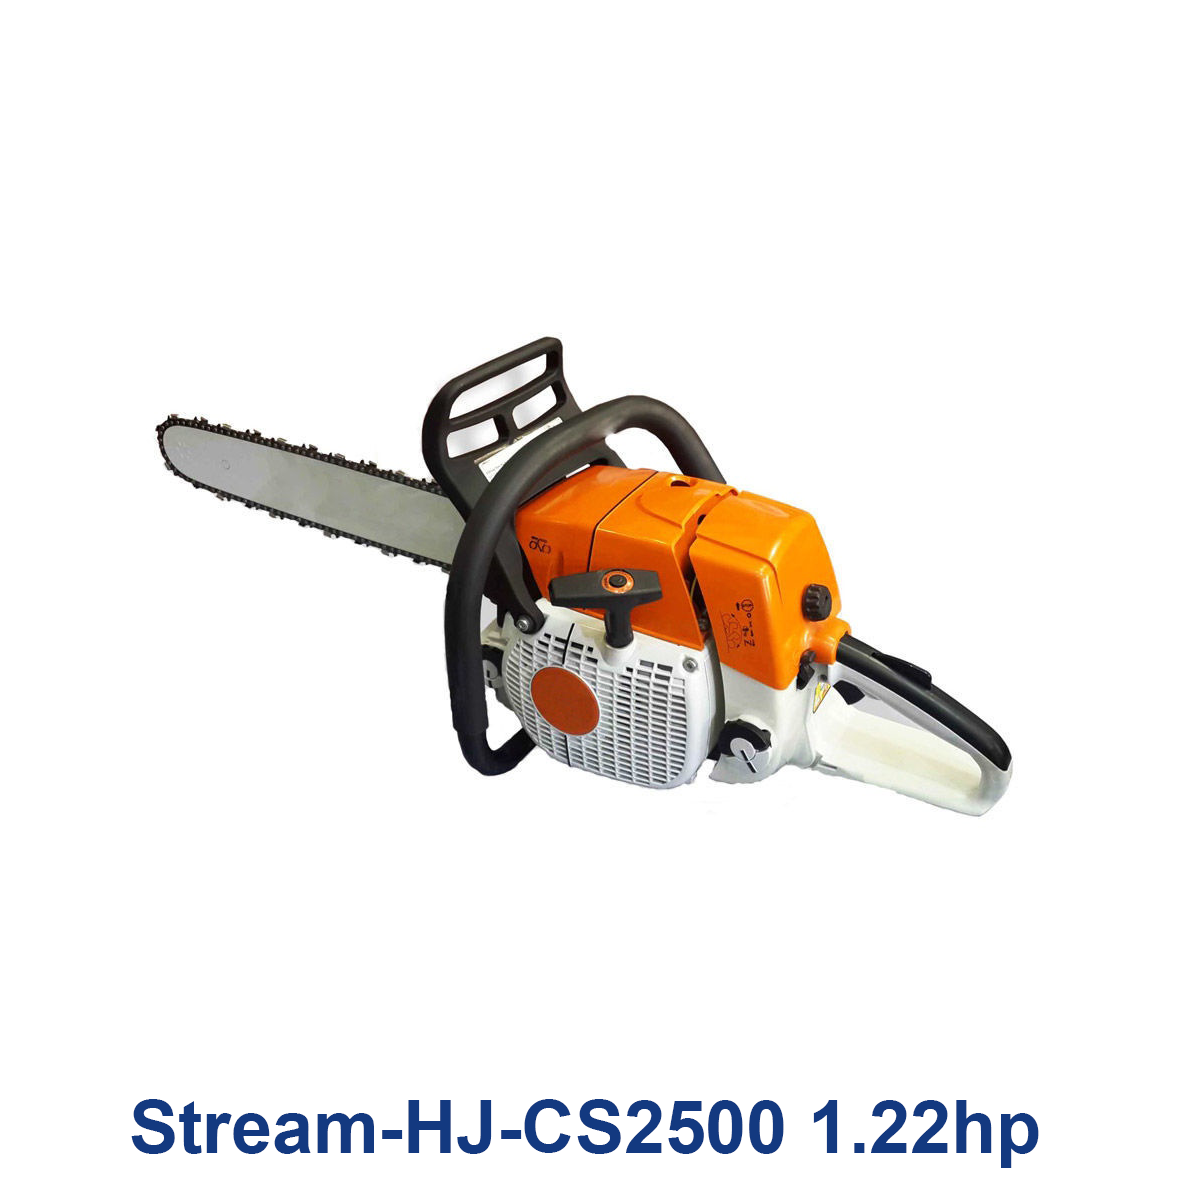 Stream-HJ-CS2500